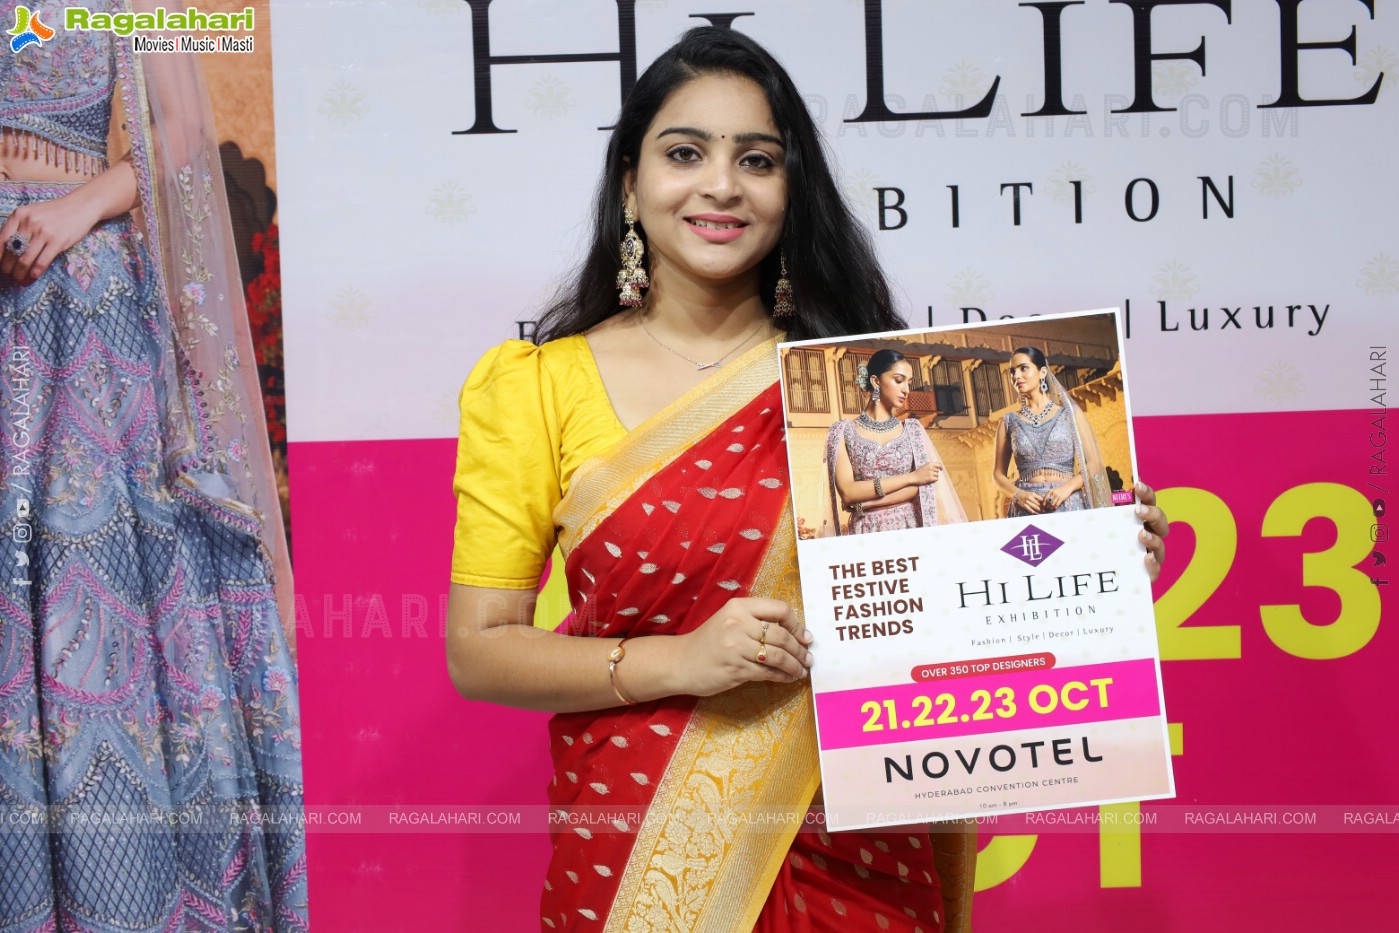 Hi-Life Exhibition Fashion Showcase Date Announcement Event, Hyderabad